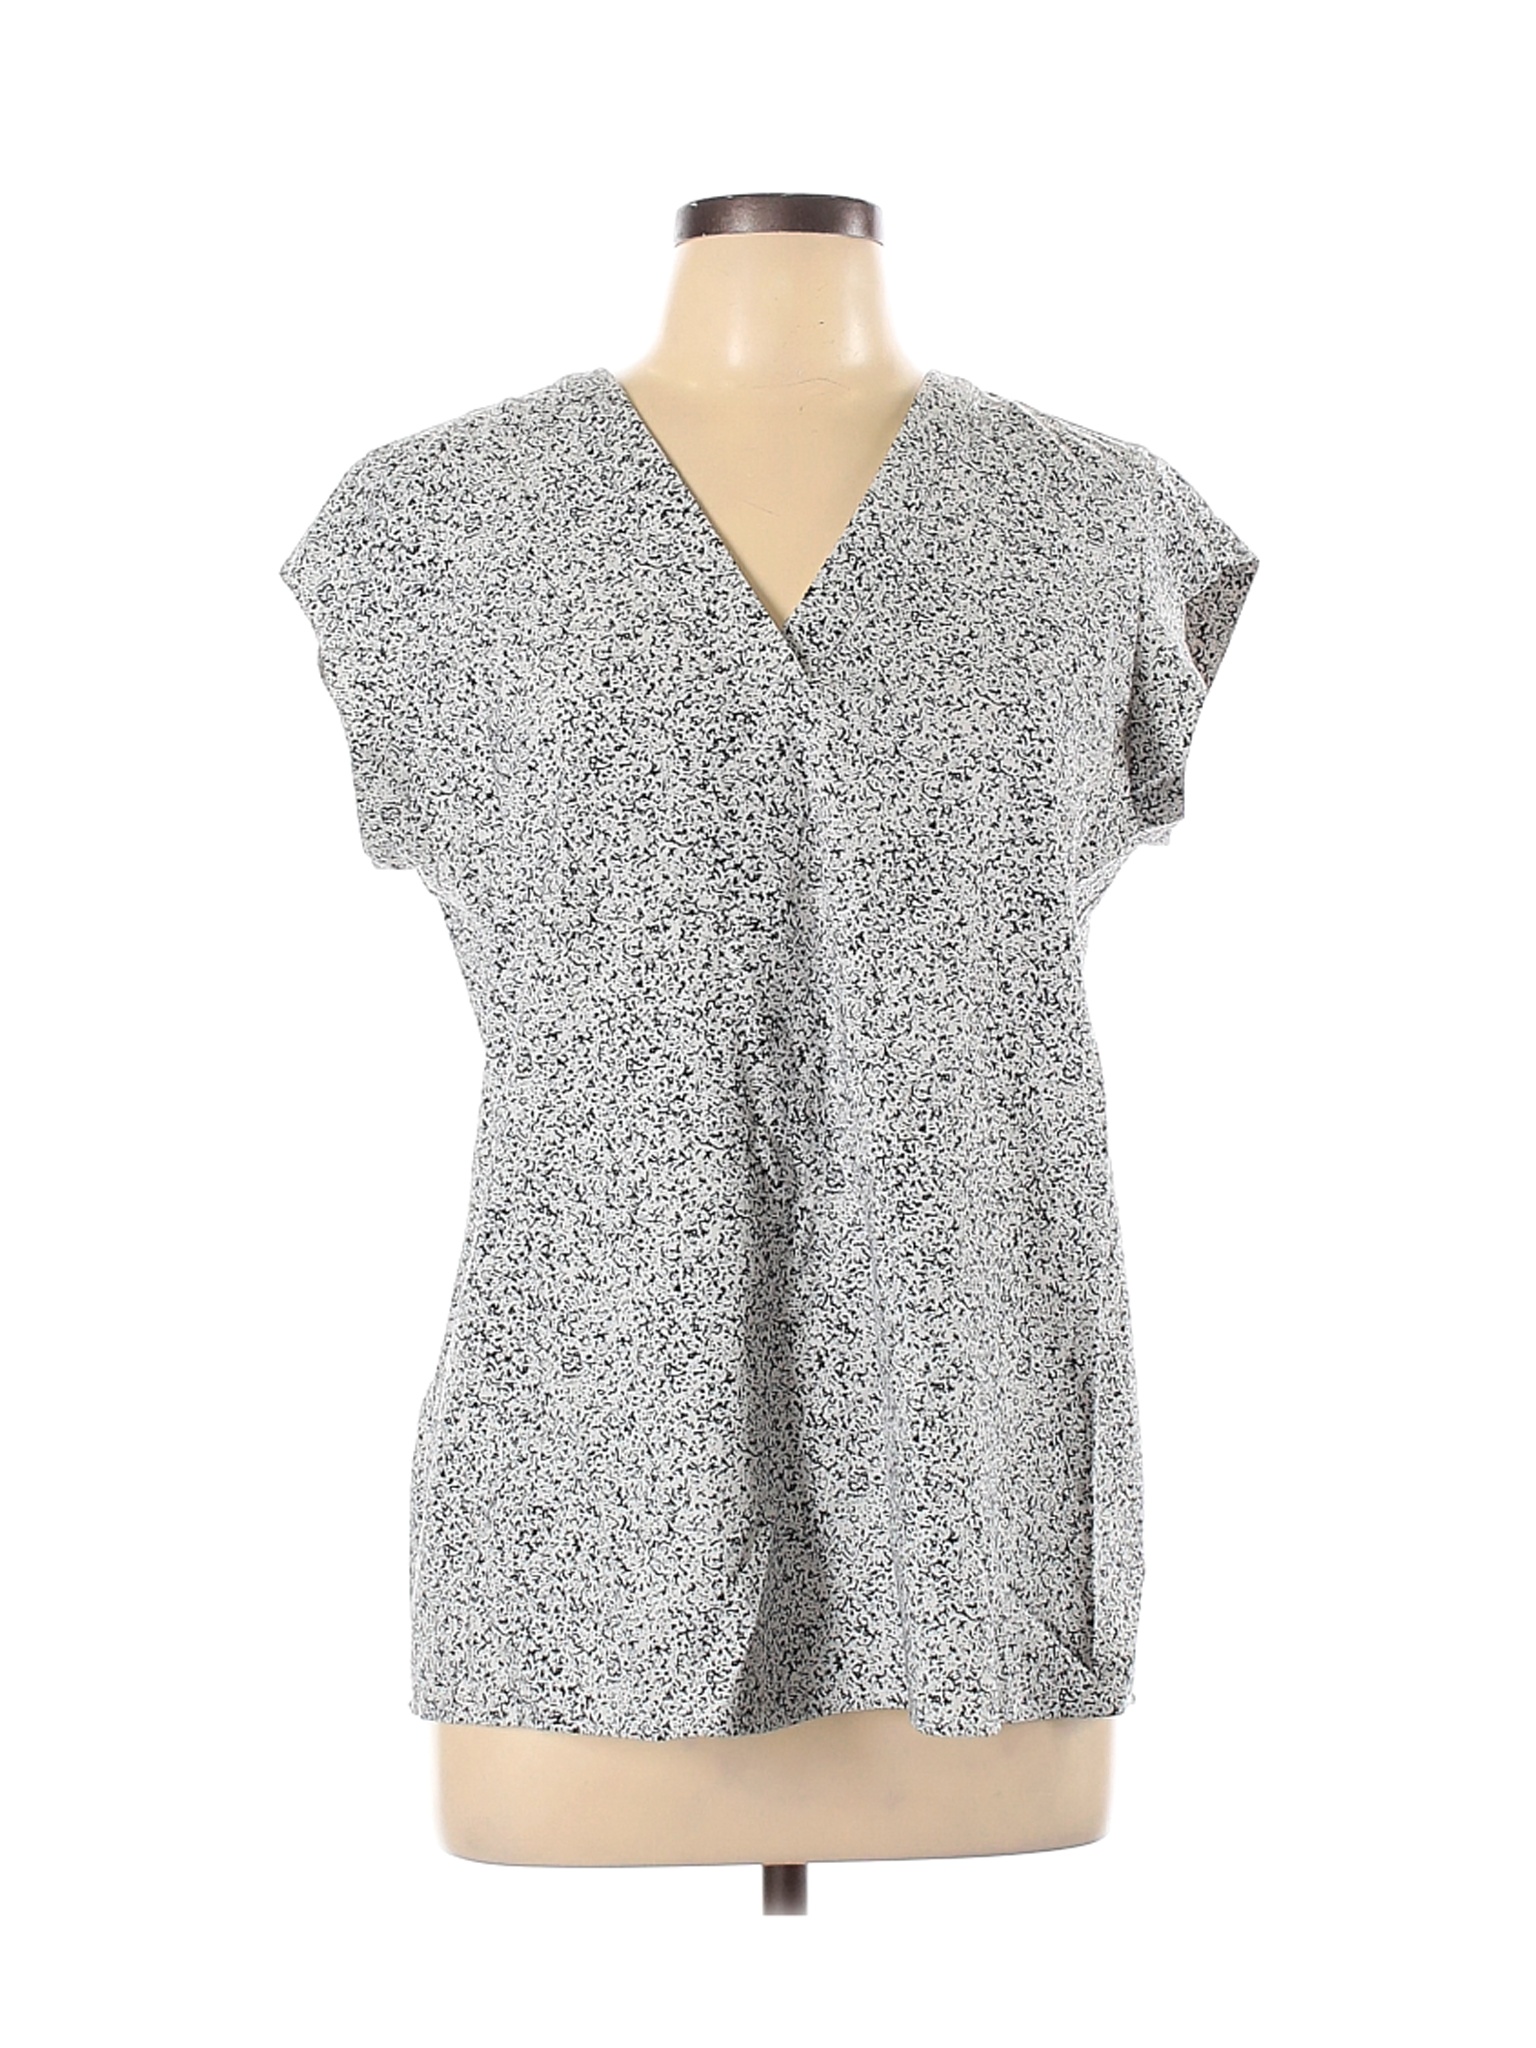 Hilary Radley Women Gray Short Sleeve Blouse L | eBay